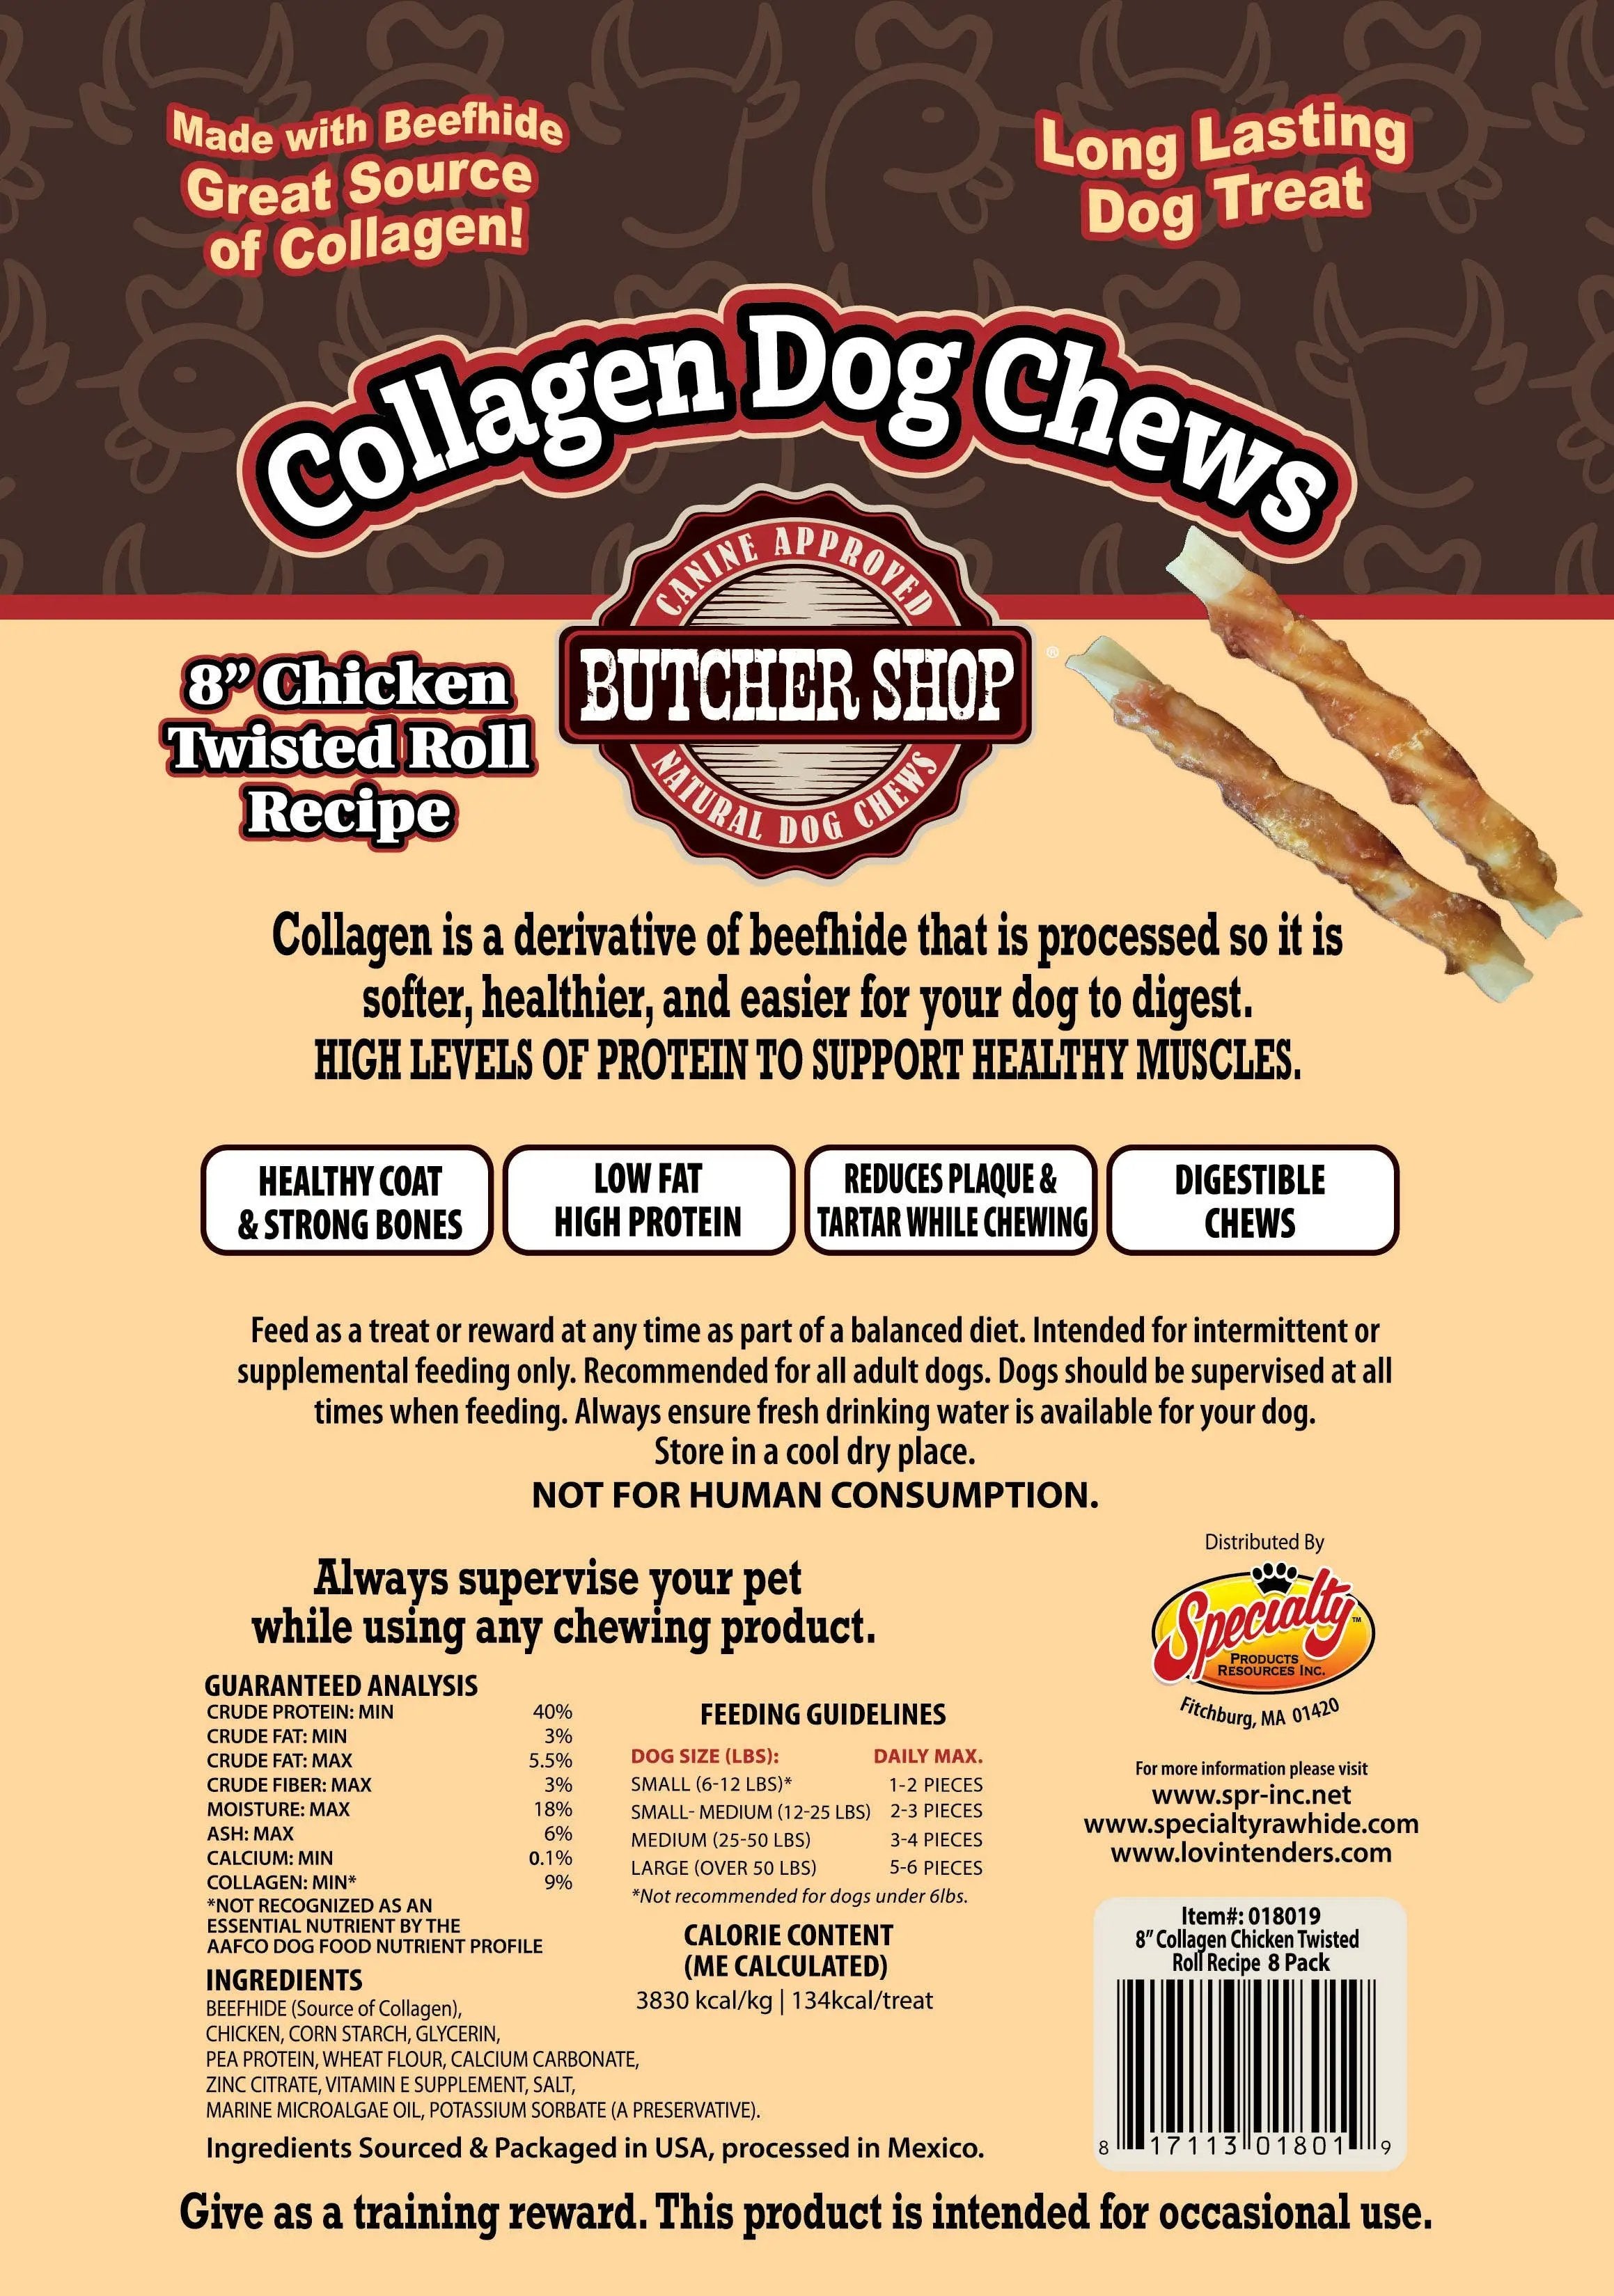 Lovin Tenders Butcher Shop Collagen Dog Chews 8" Chicken Twisted Roll 8-Pk